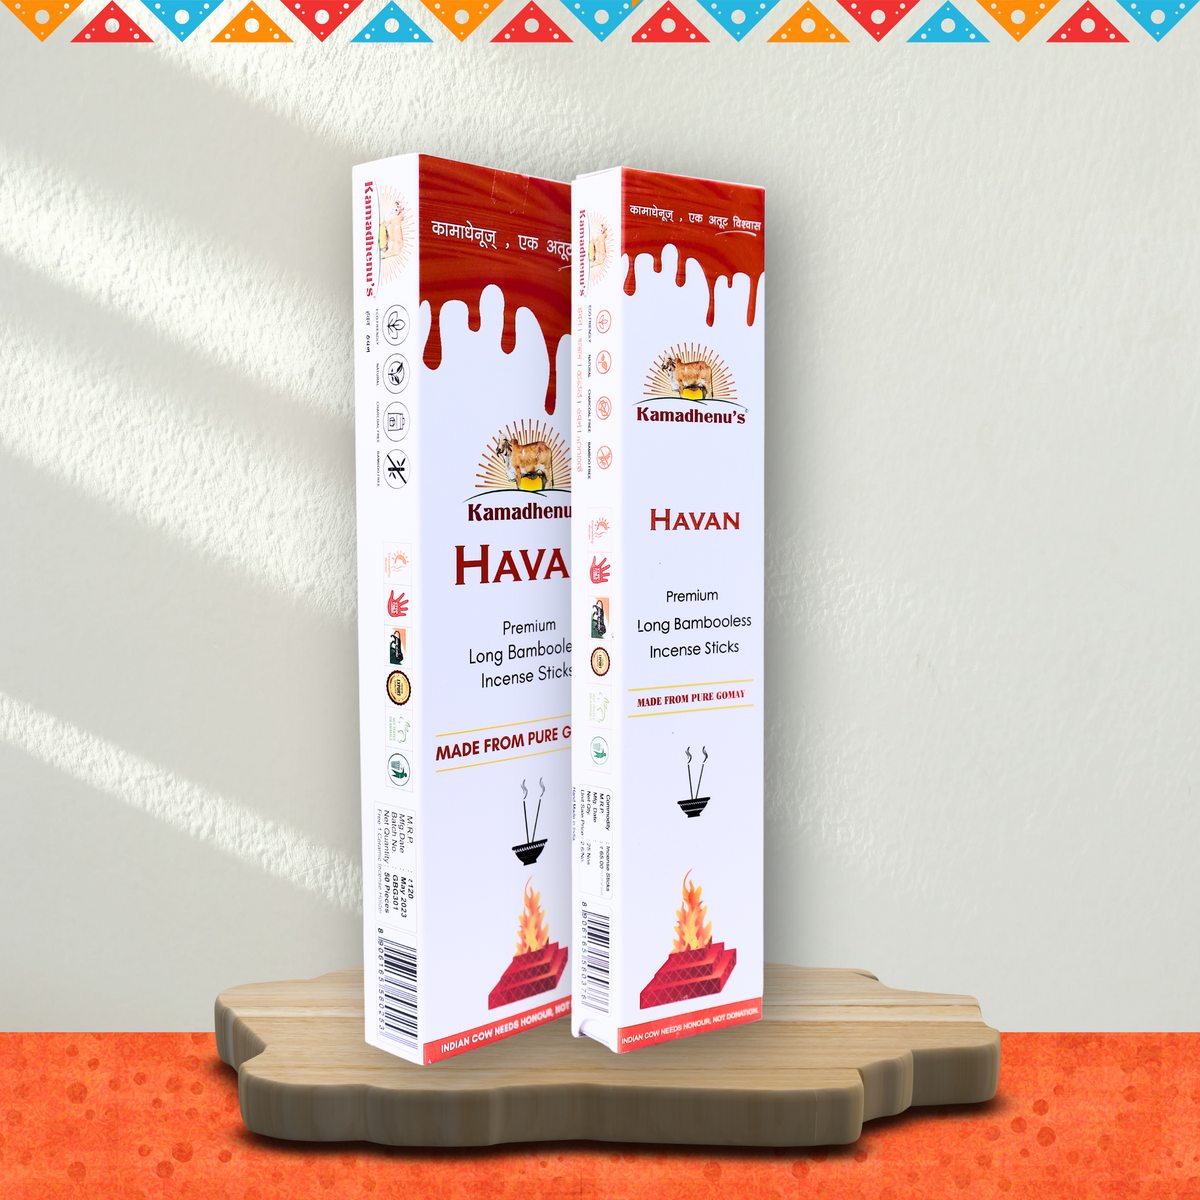 Kamadhenu's Havan Premium Long Bambooless Incense Sticks